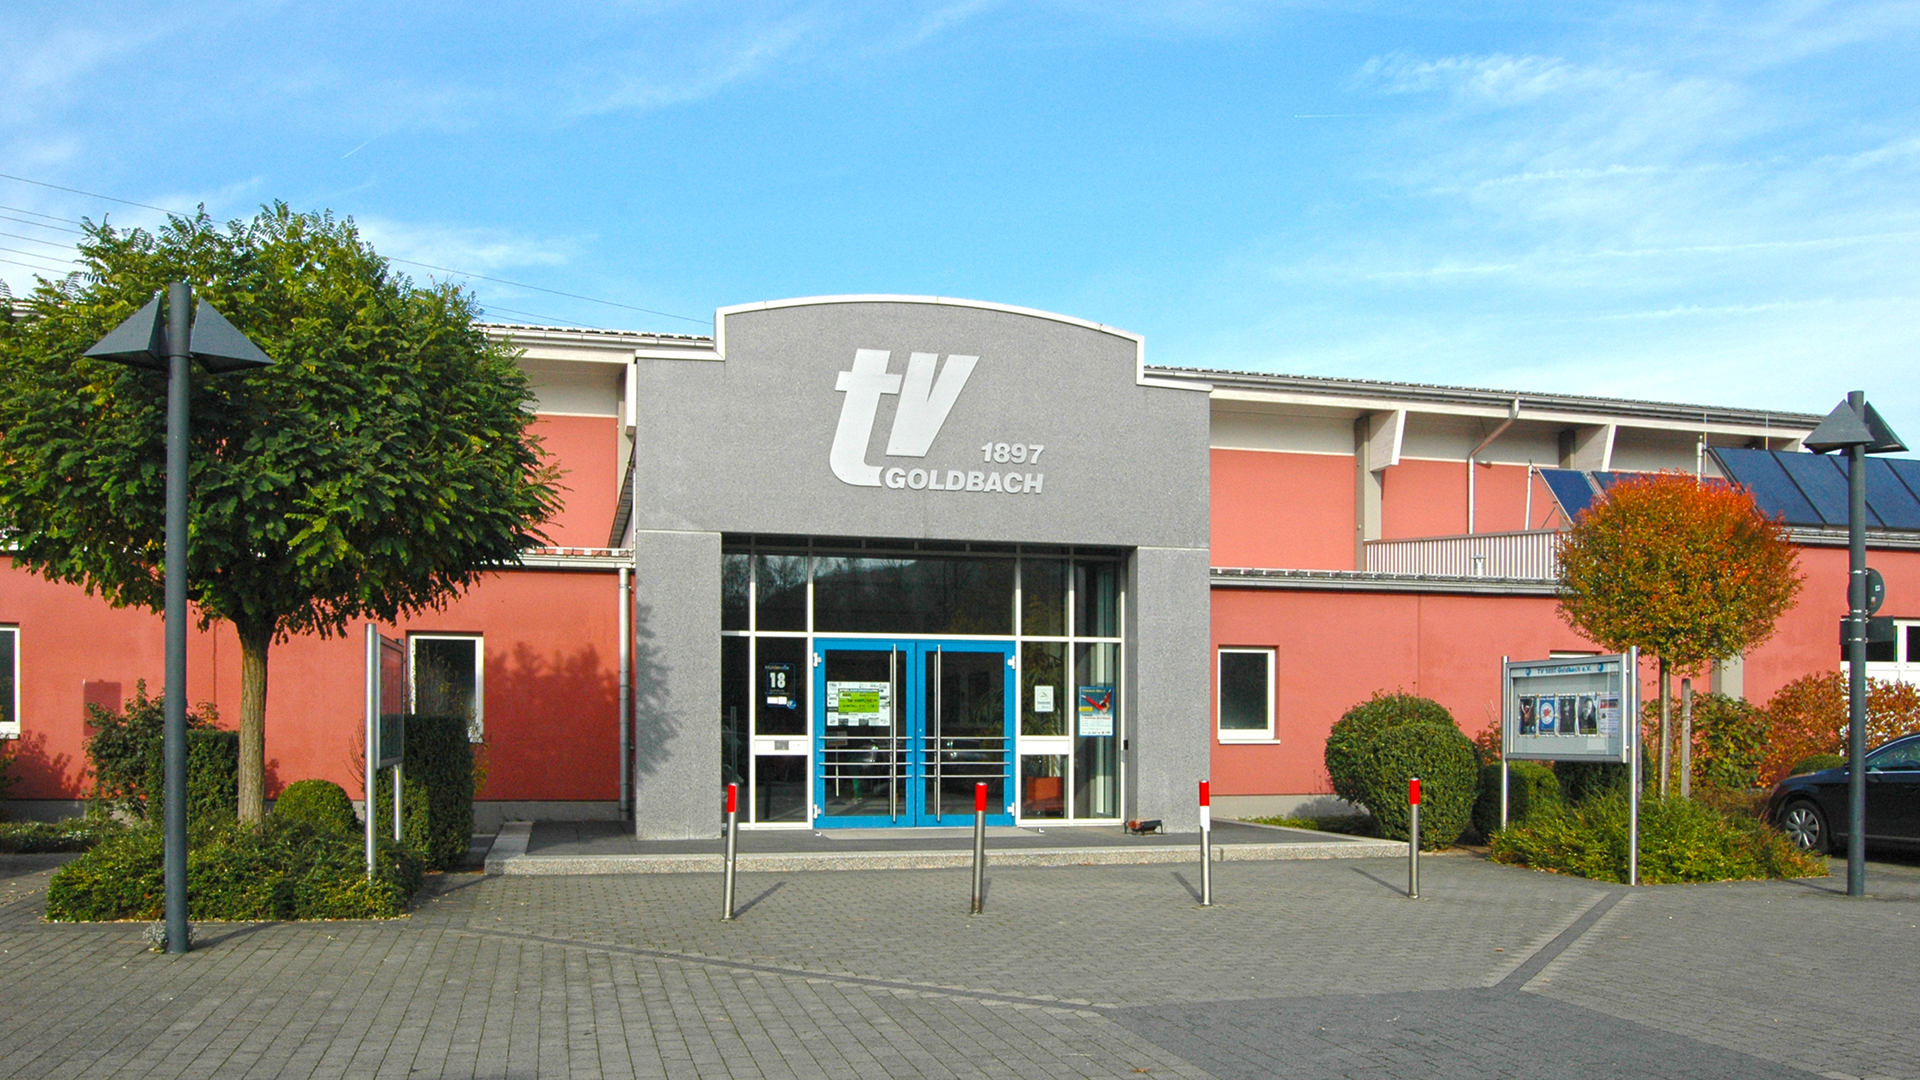 TV Sporthalle Goldbach